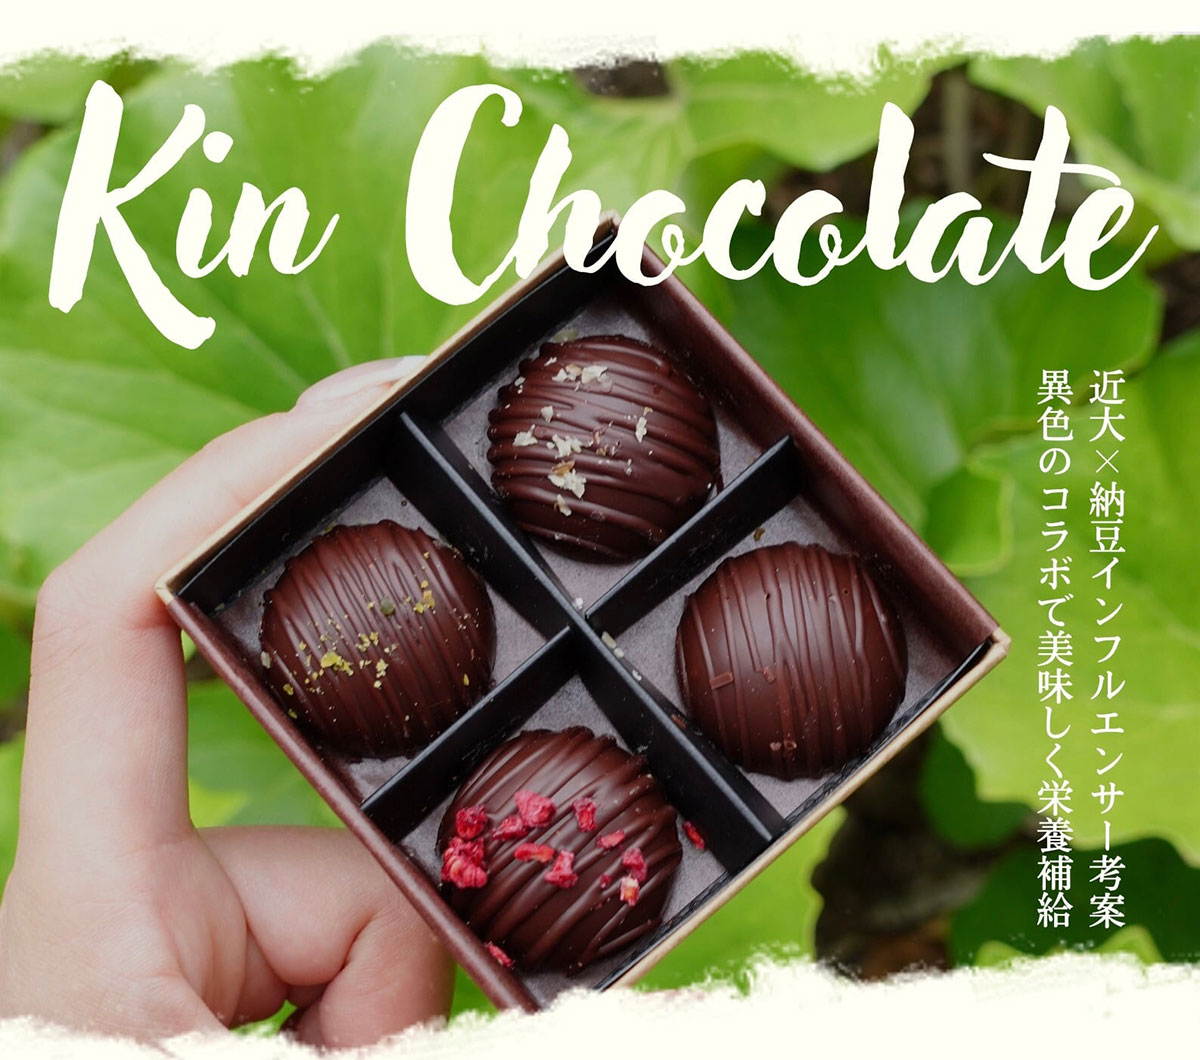 Kin Chocolate